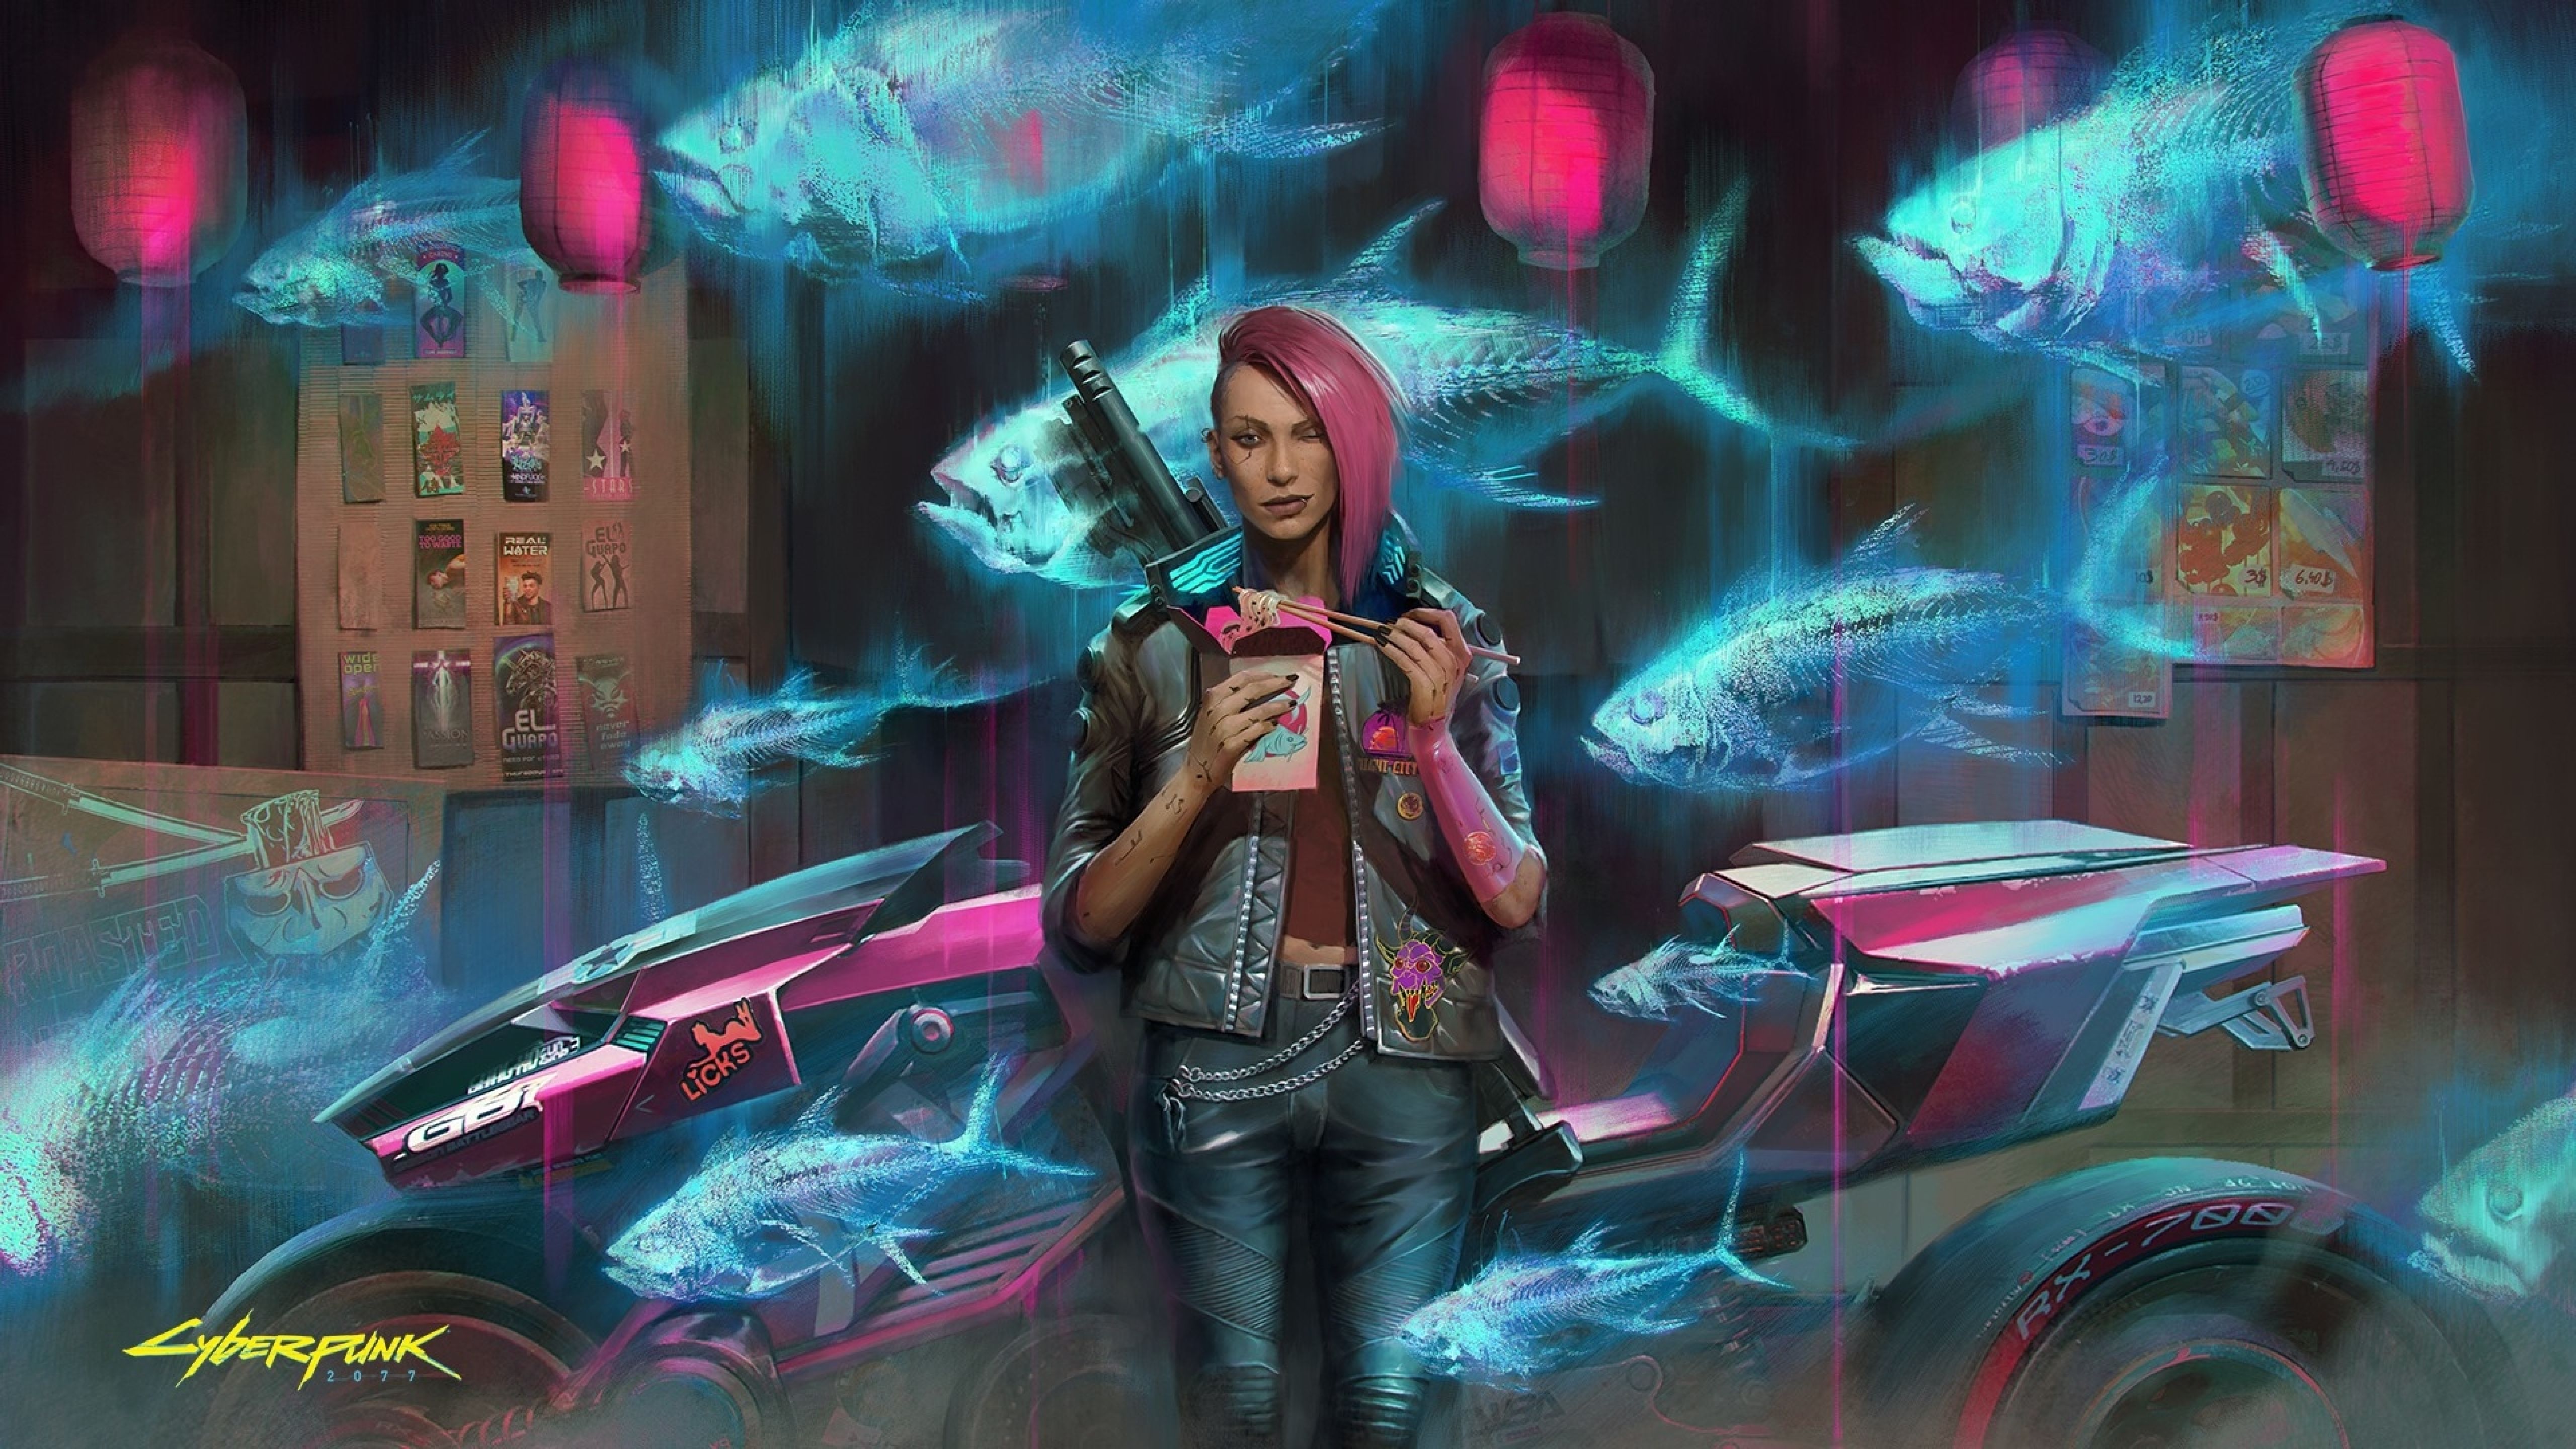 Cyberpunk 2077 Cyborg Girl Art 5K Wallpaper, HD Games 4K Wallpaper, Image, Photo and Background